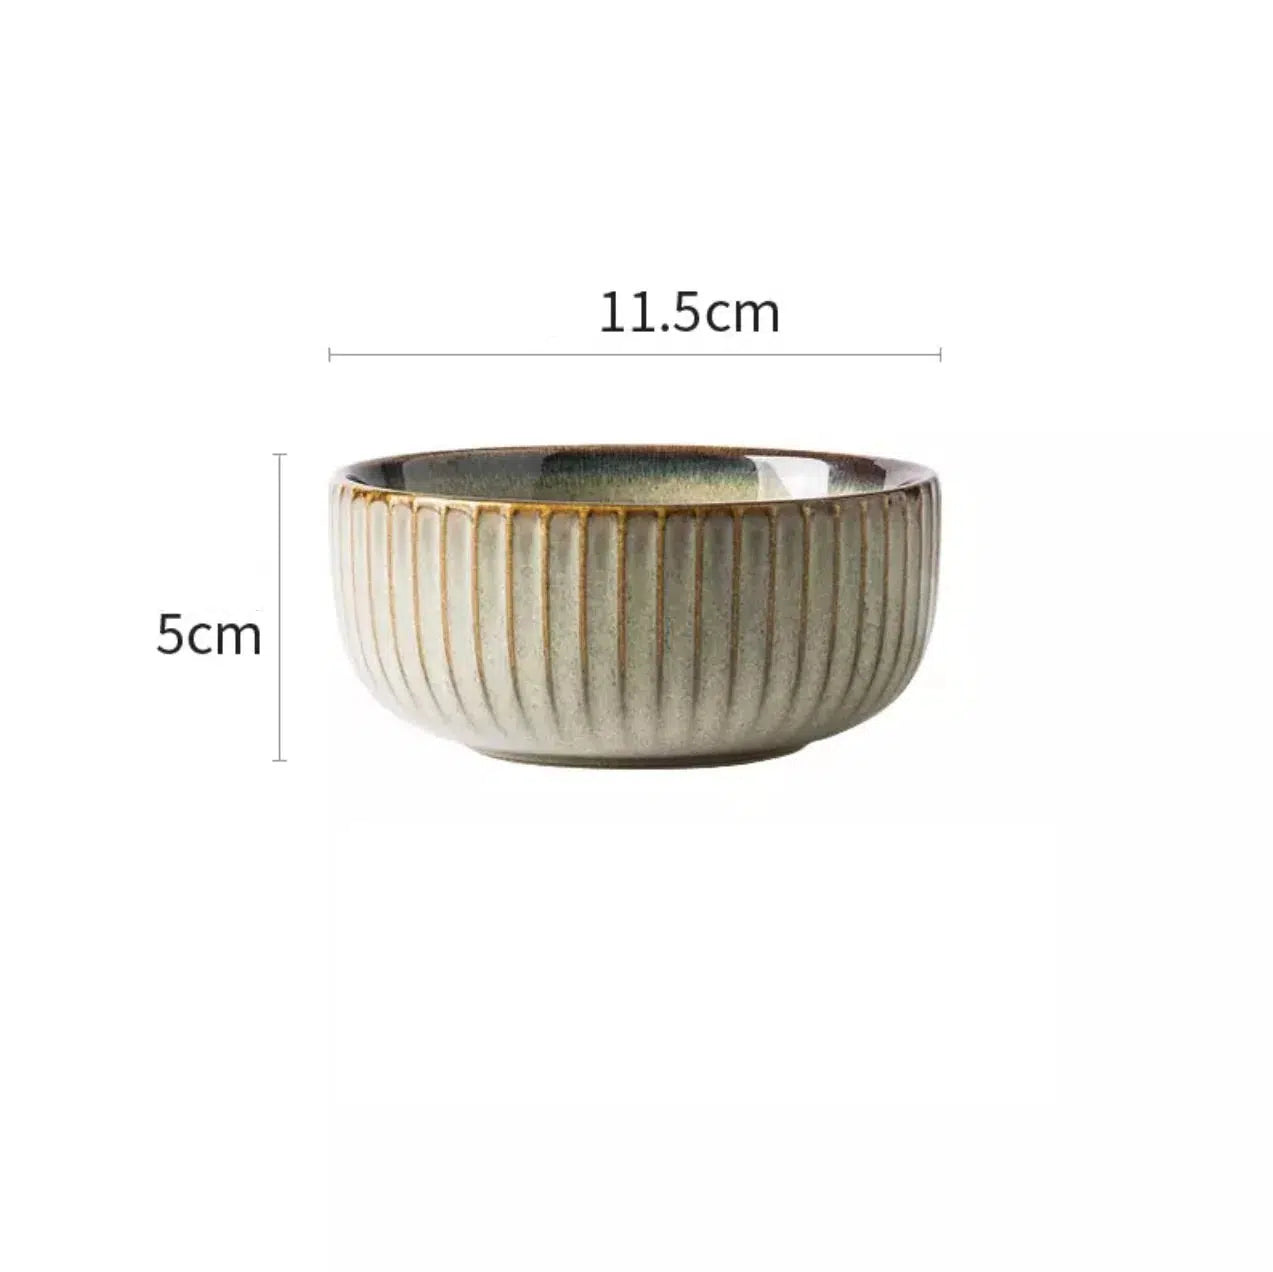 Rustic Ceramic Tableware Hestia + Co. Small bowl 